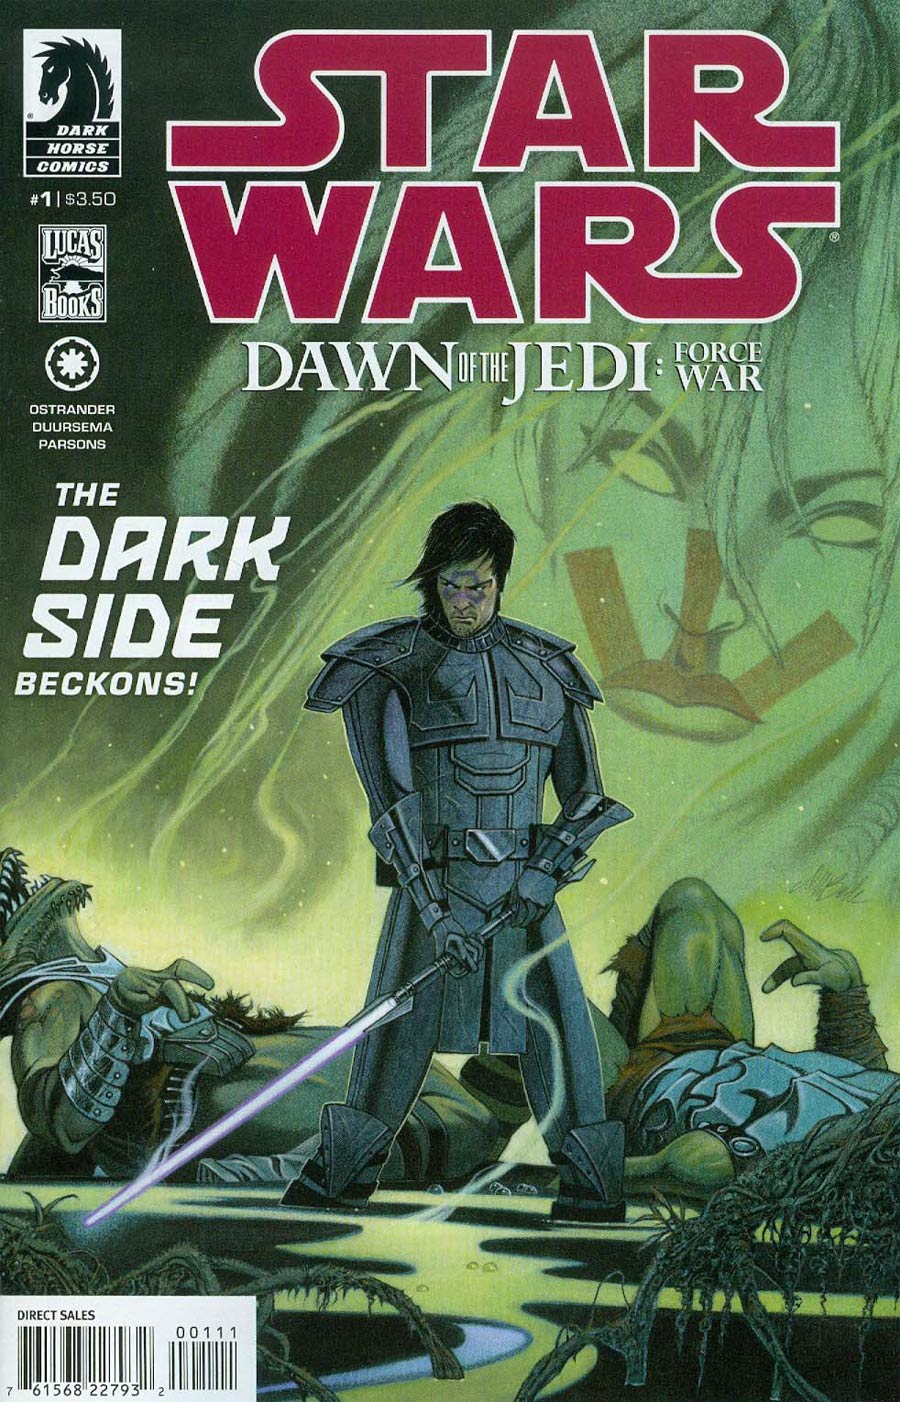 Star Wars Dawn Of The Jedi Force War #1